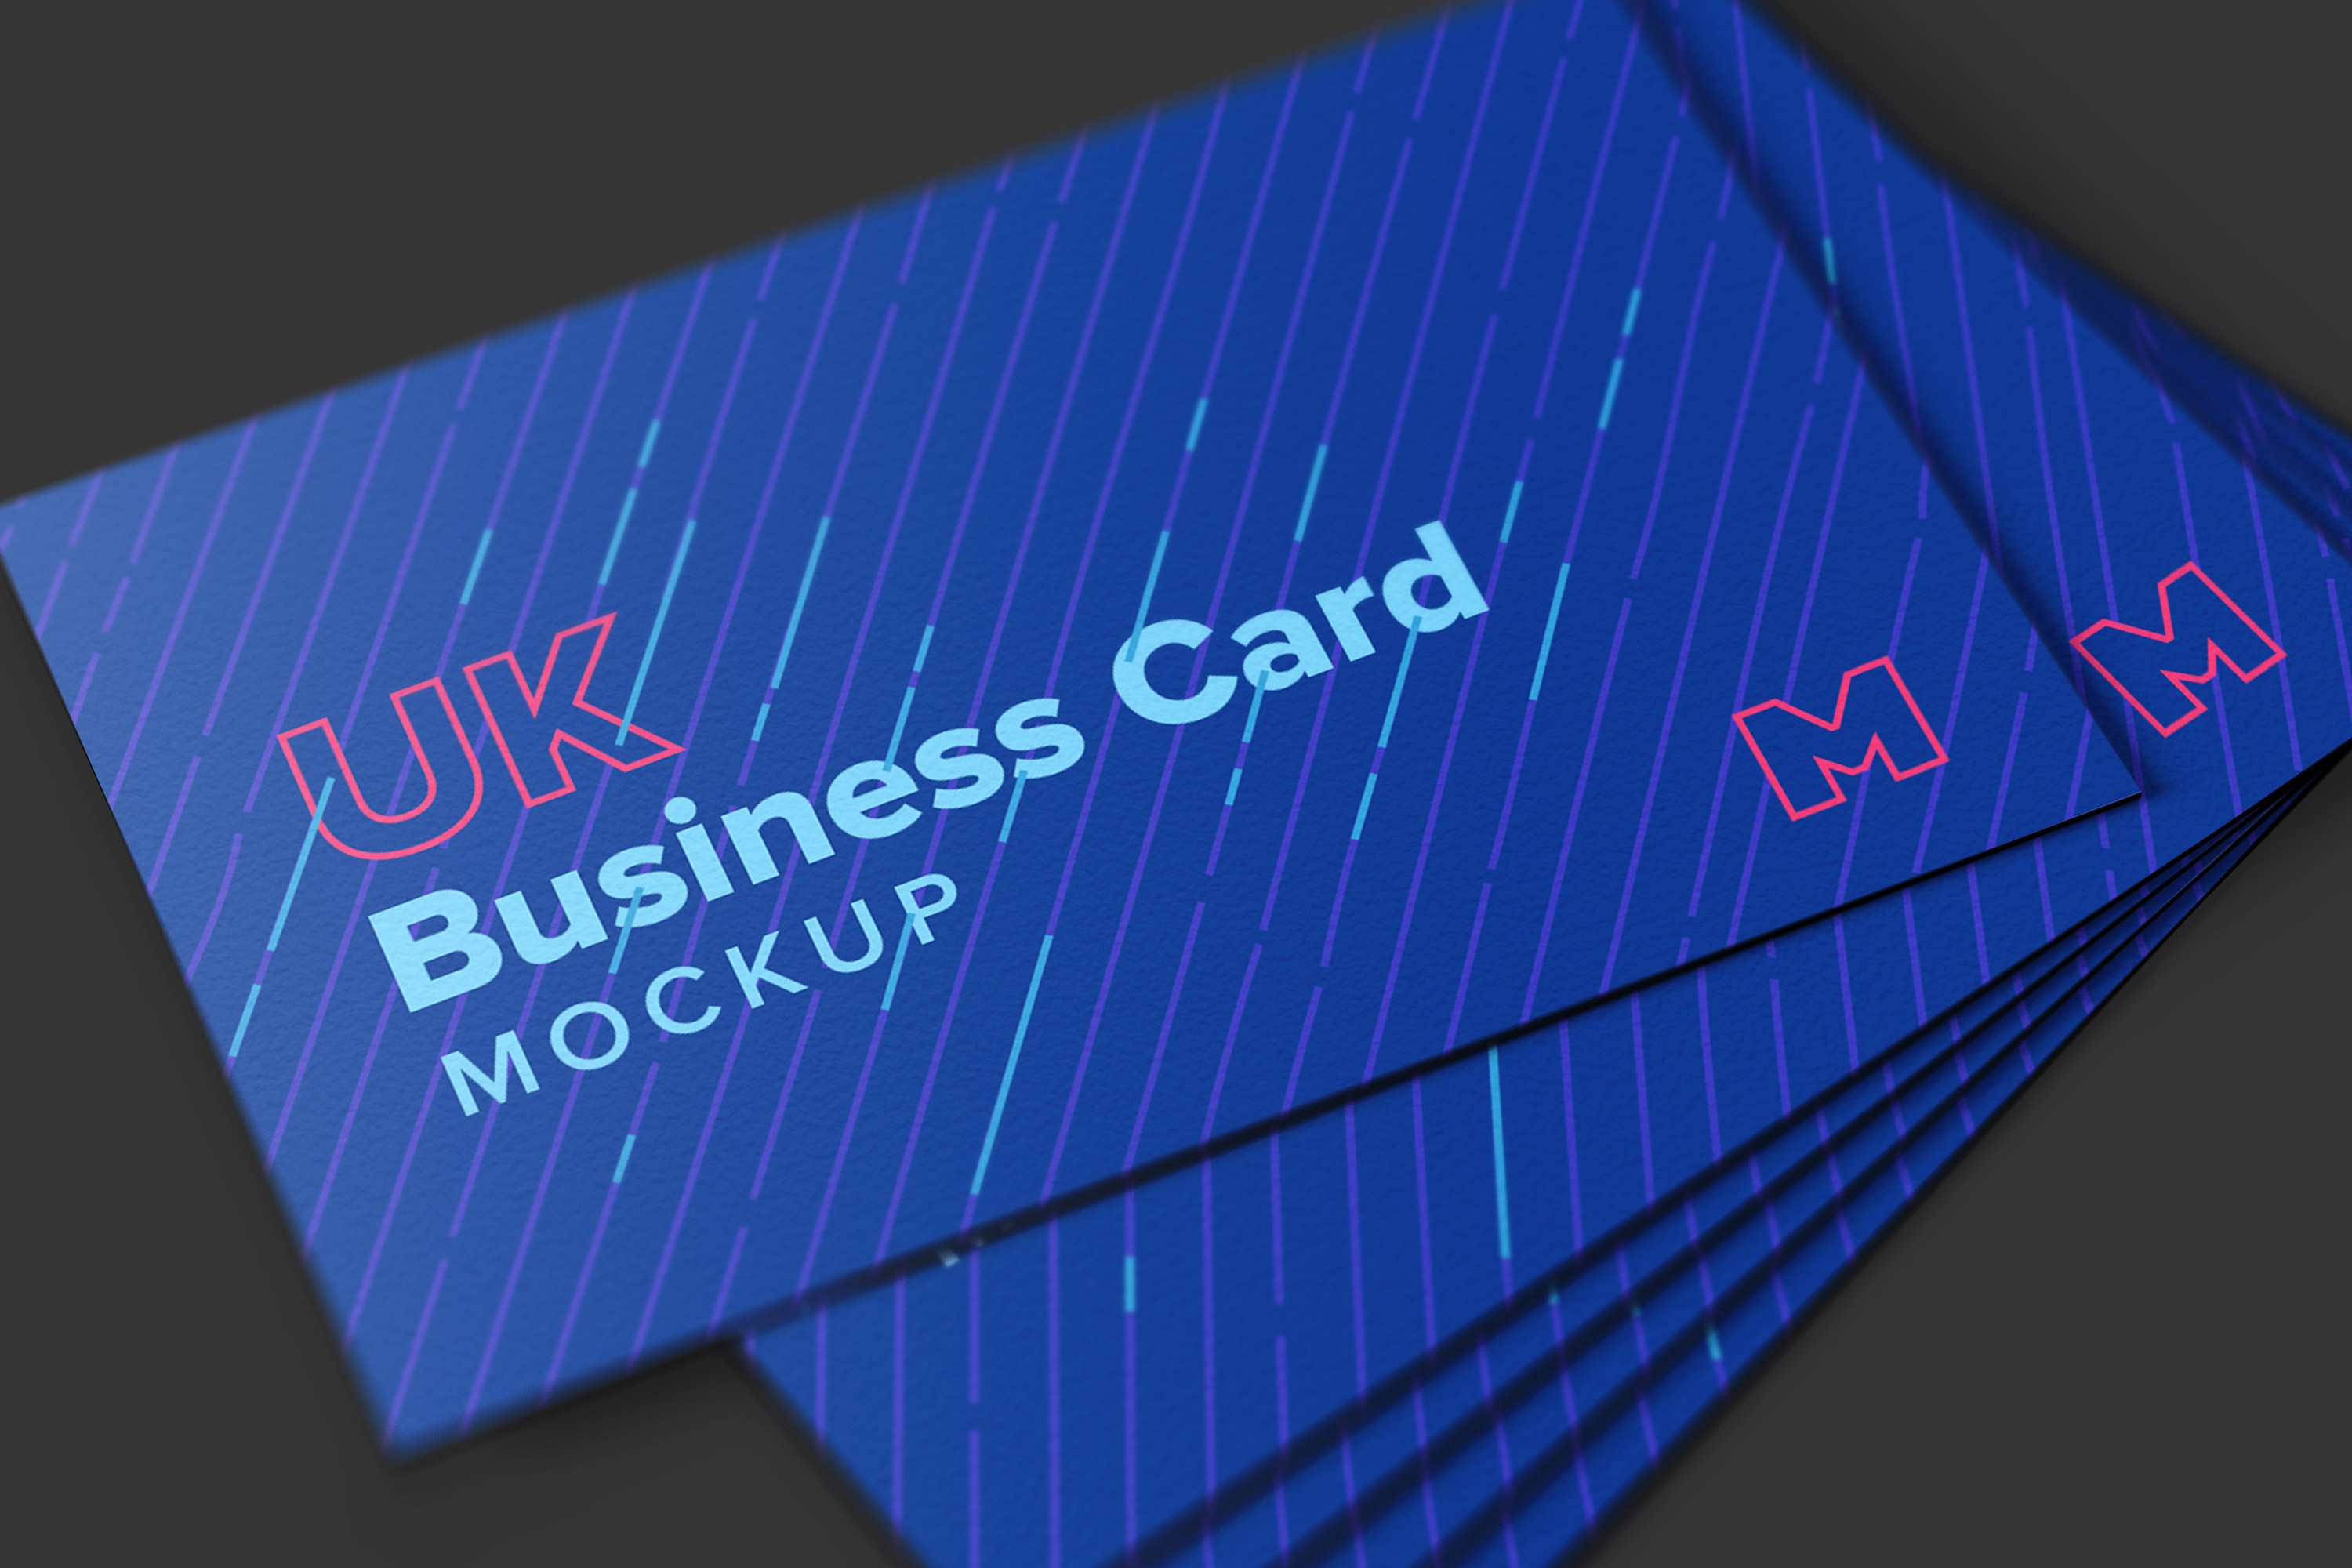 UK尺寸标准企业名片设计效果图预览样机模板04 UK Business Cards Mockup 04插图(4)